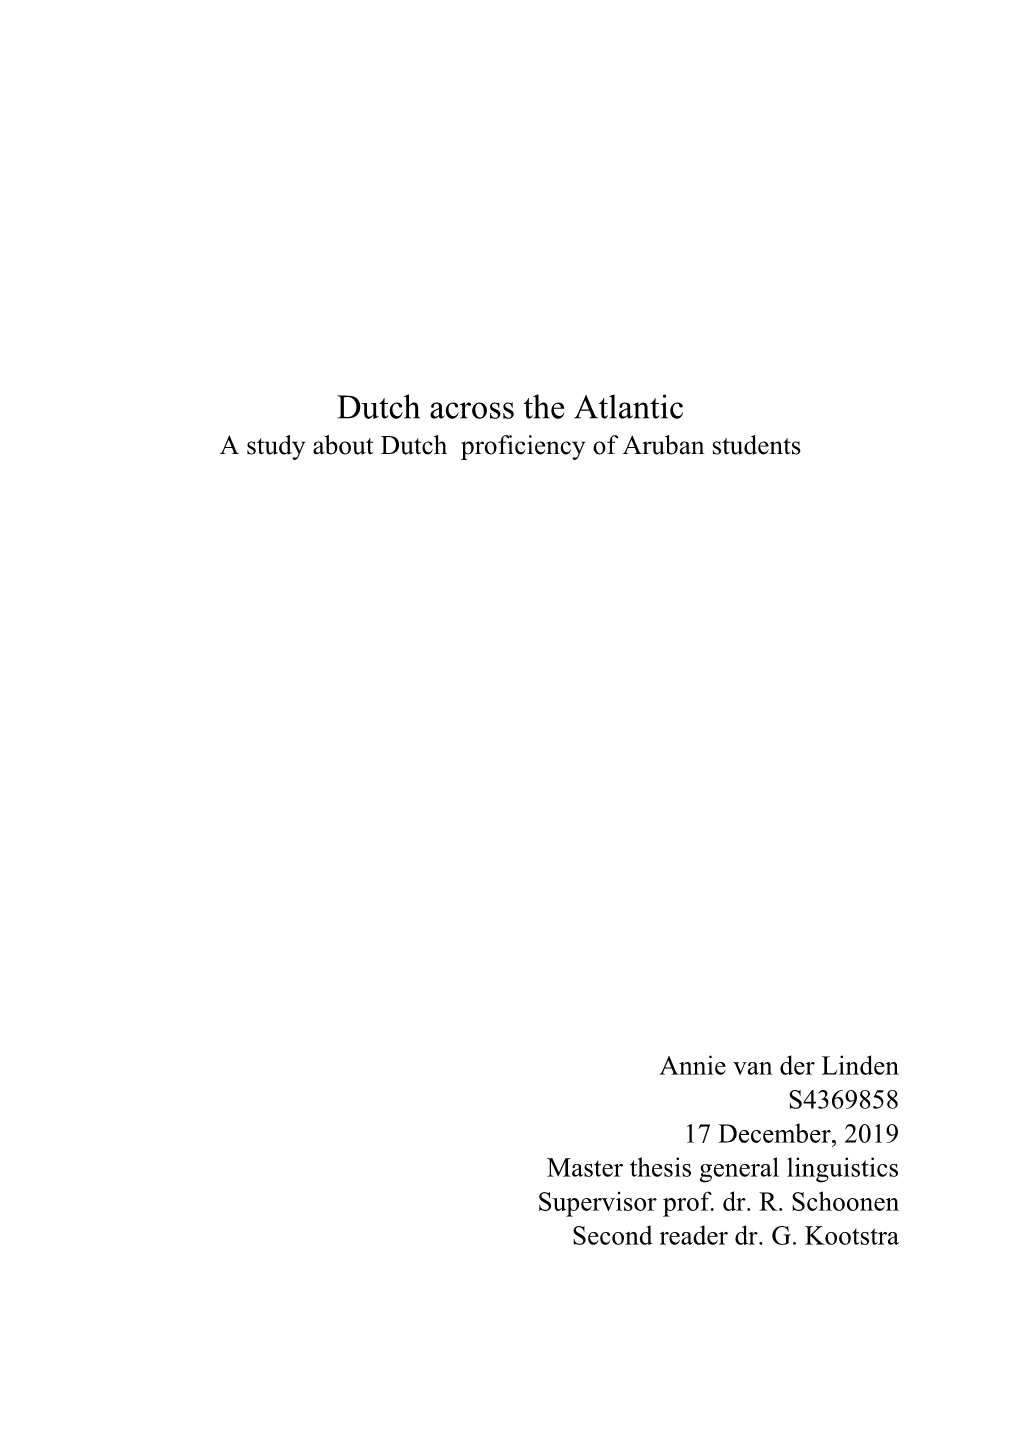 Dutch Across the Atlantic a Study About Dutch Proficiency of Aruban Students